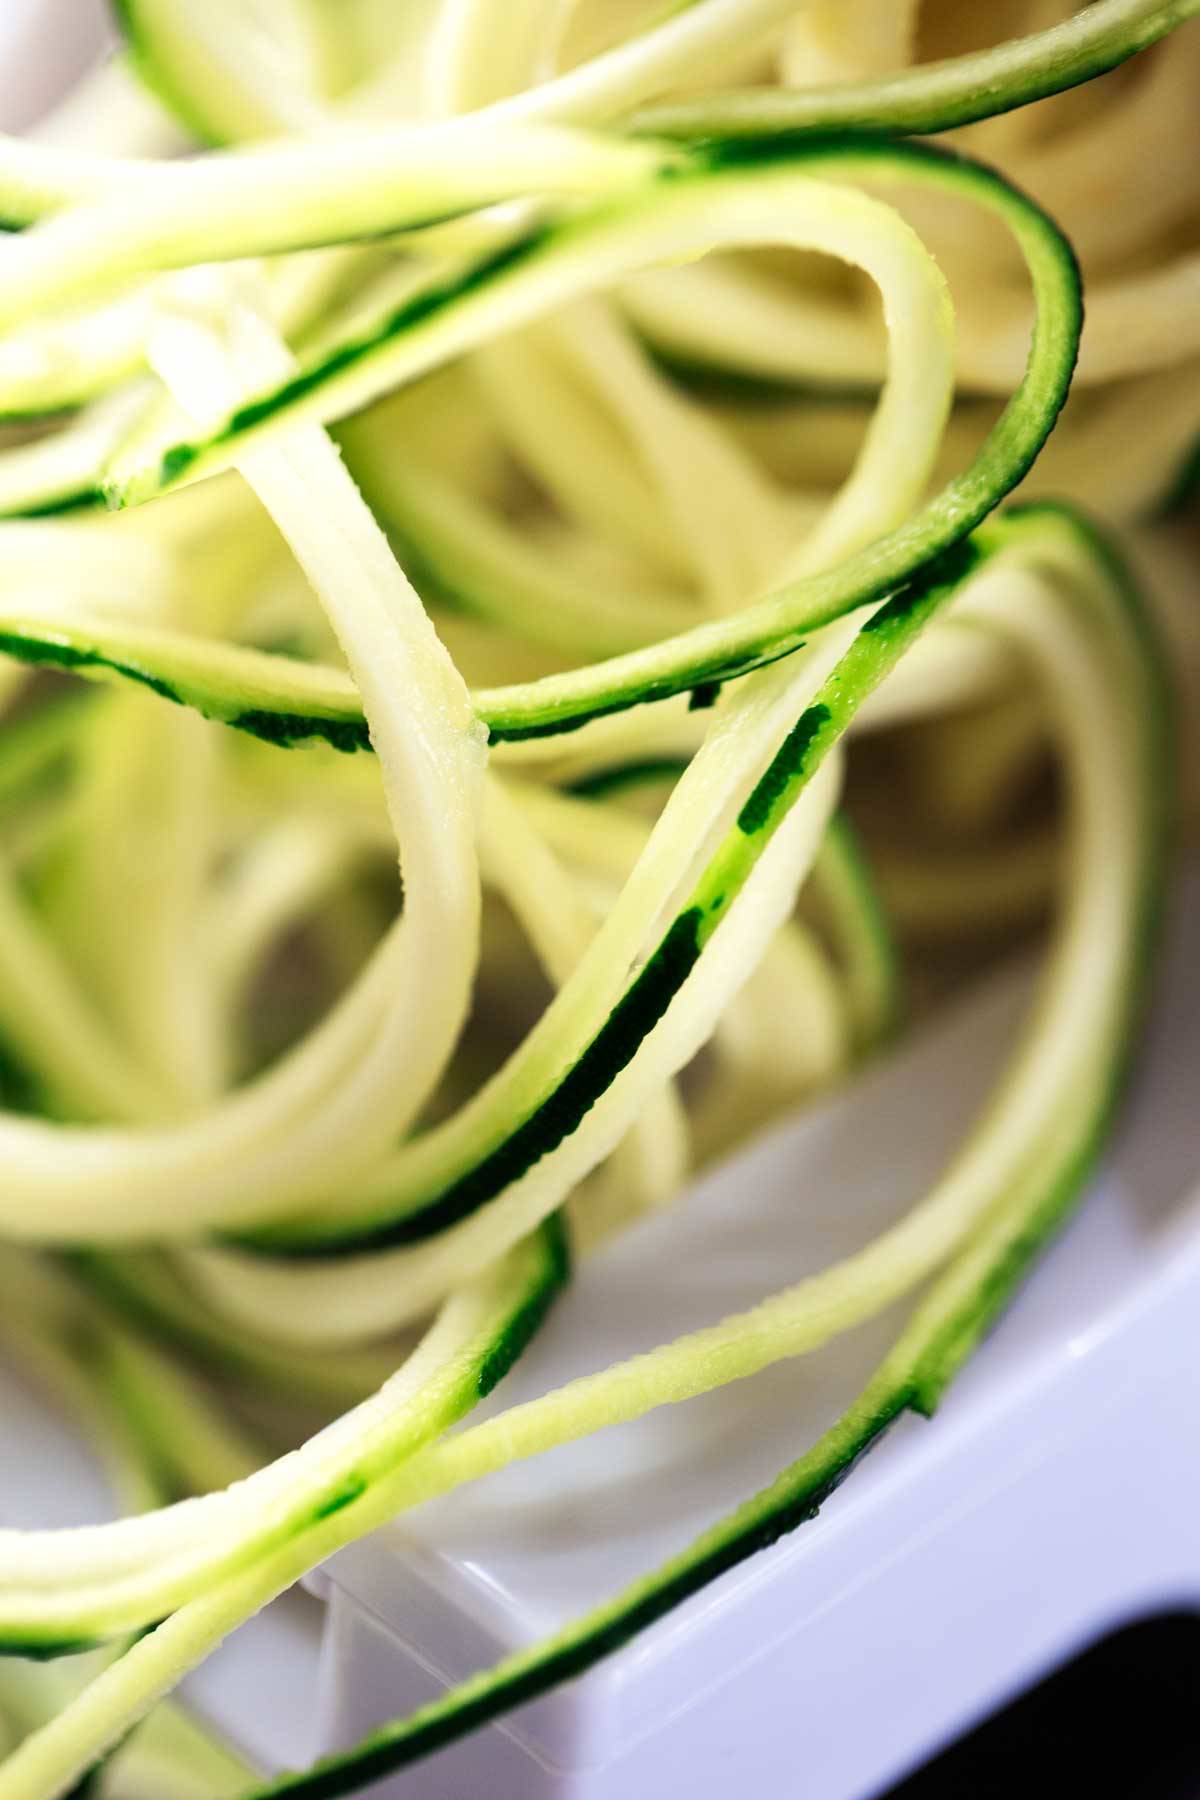 Spiralized zucchini noodles.